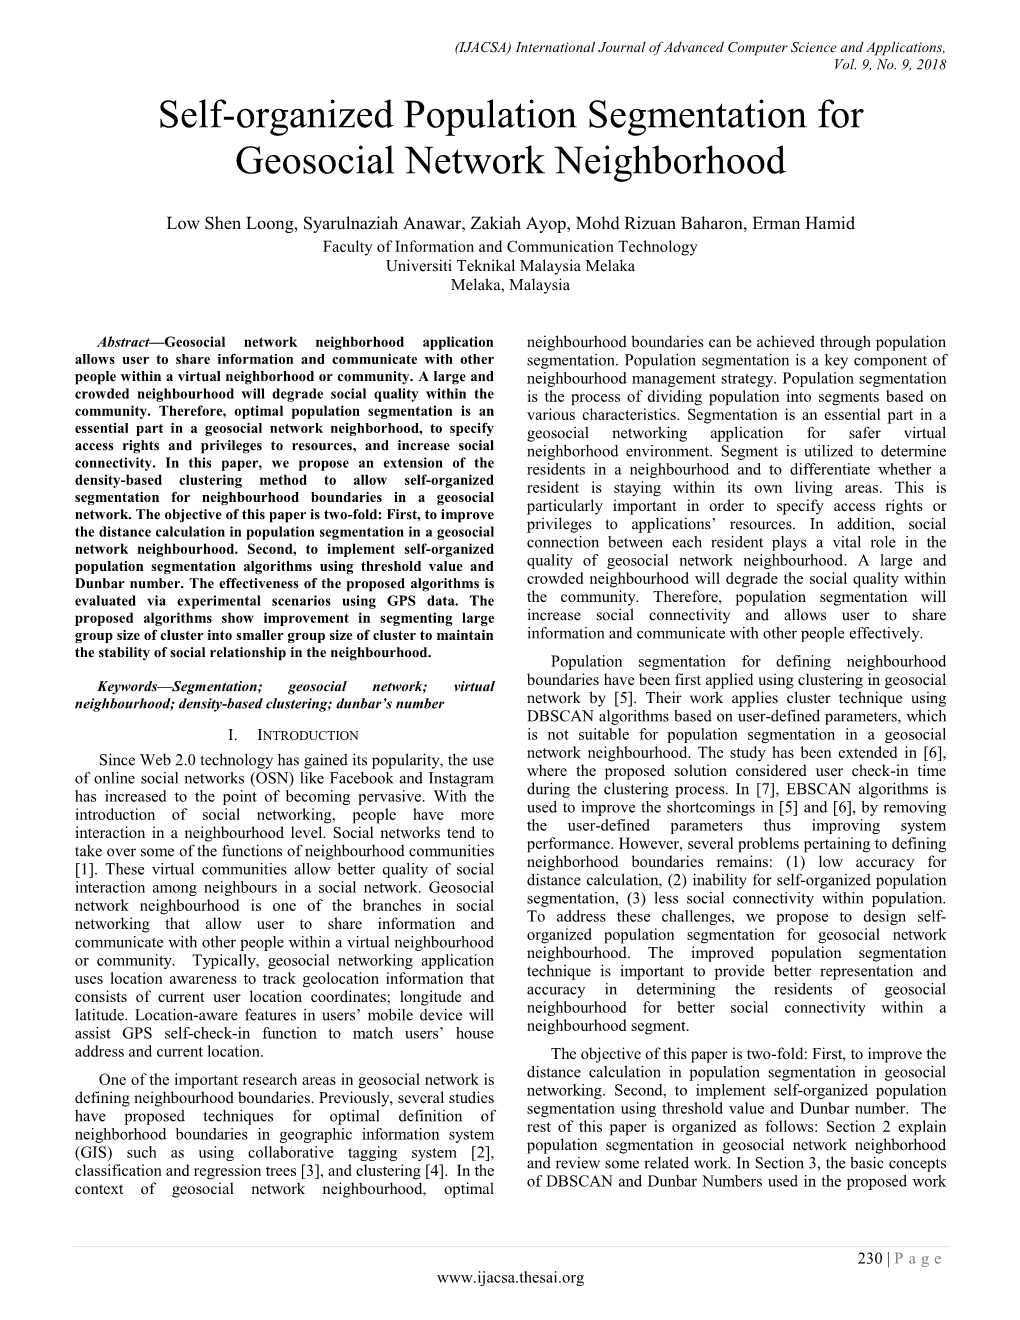 Self-Organized Population Segmentation for Geosocial Network Neighborhood